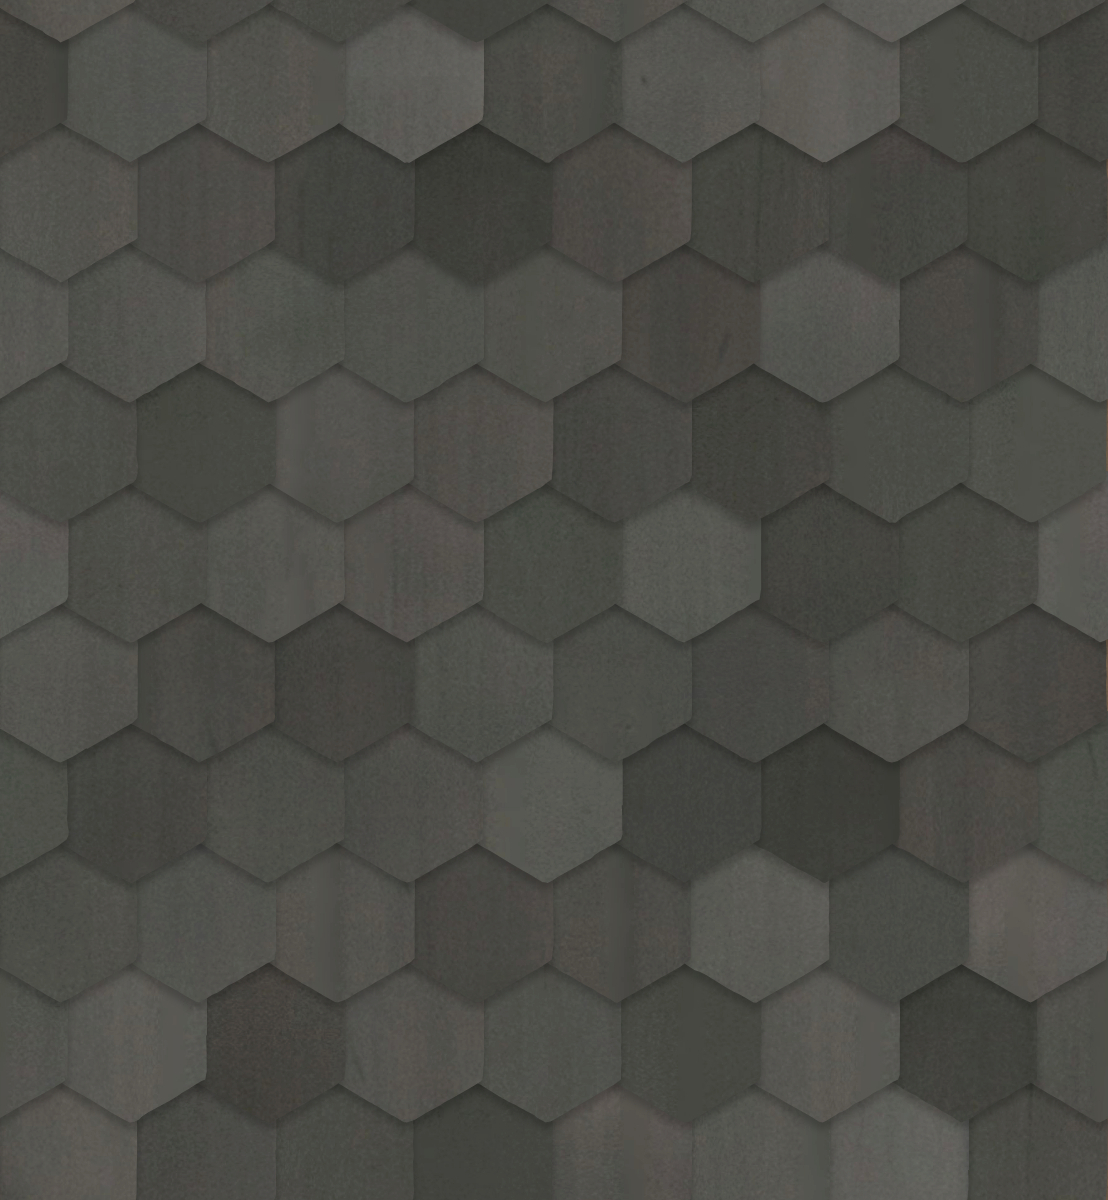 A seamless metal texture with zinc sheets arranged in a Hexagonal pattern